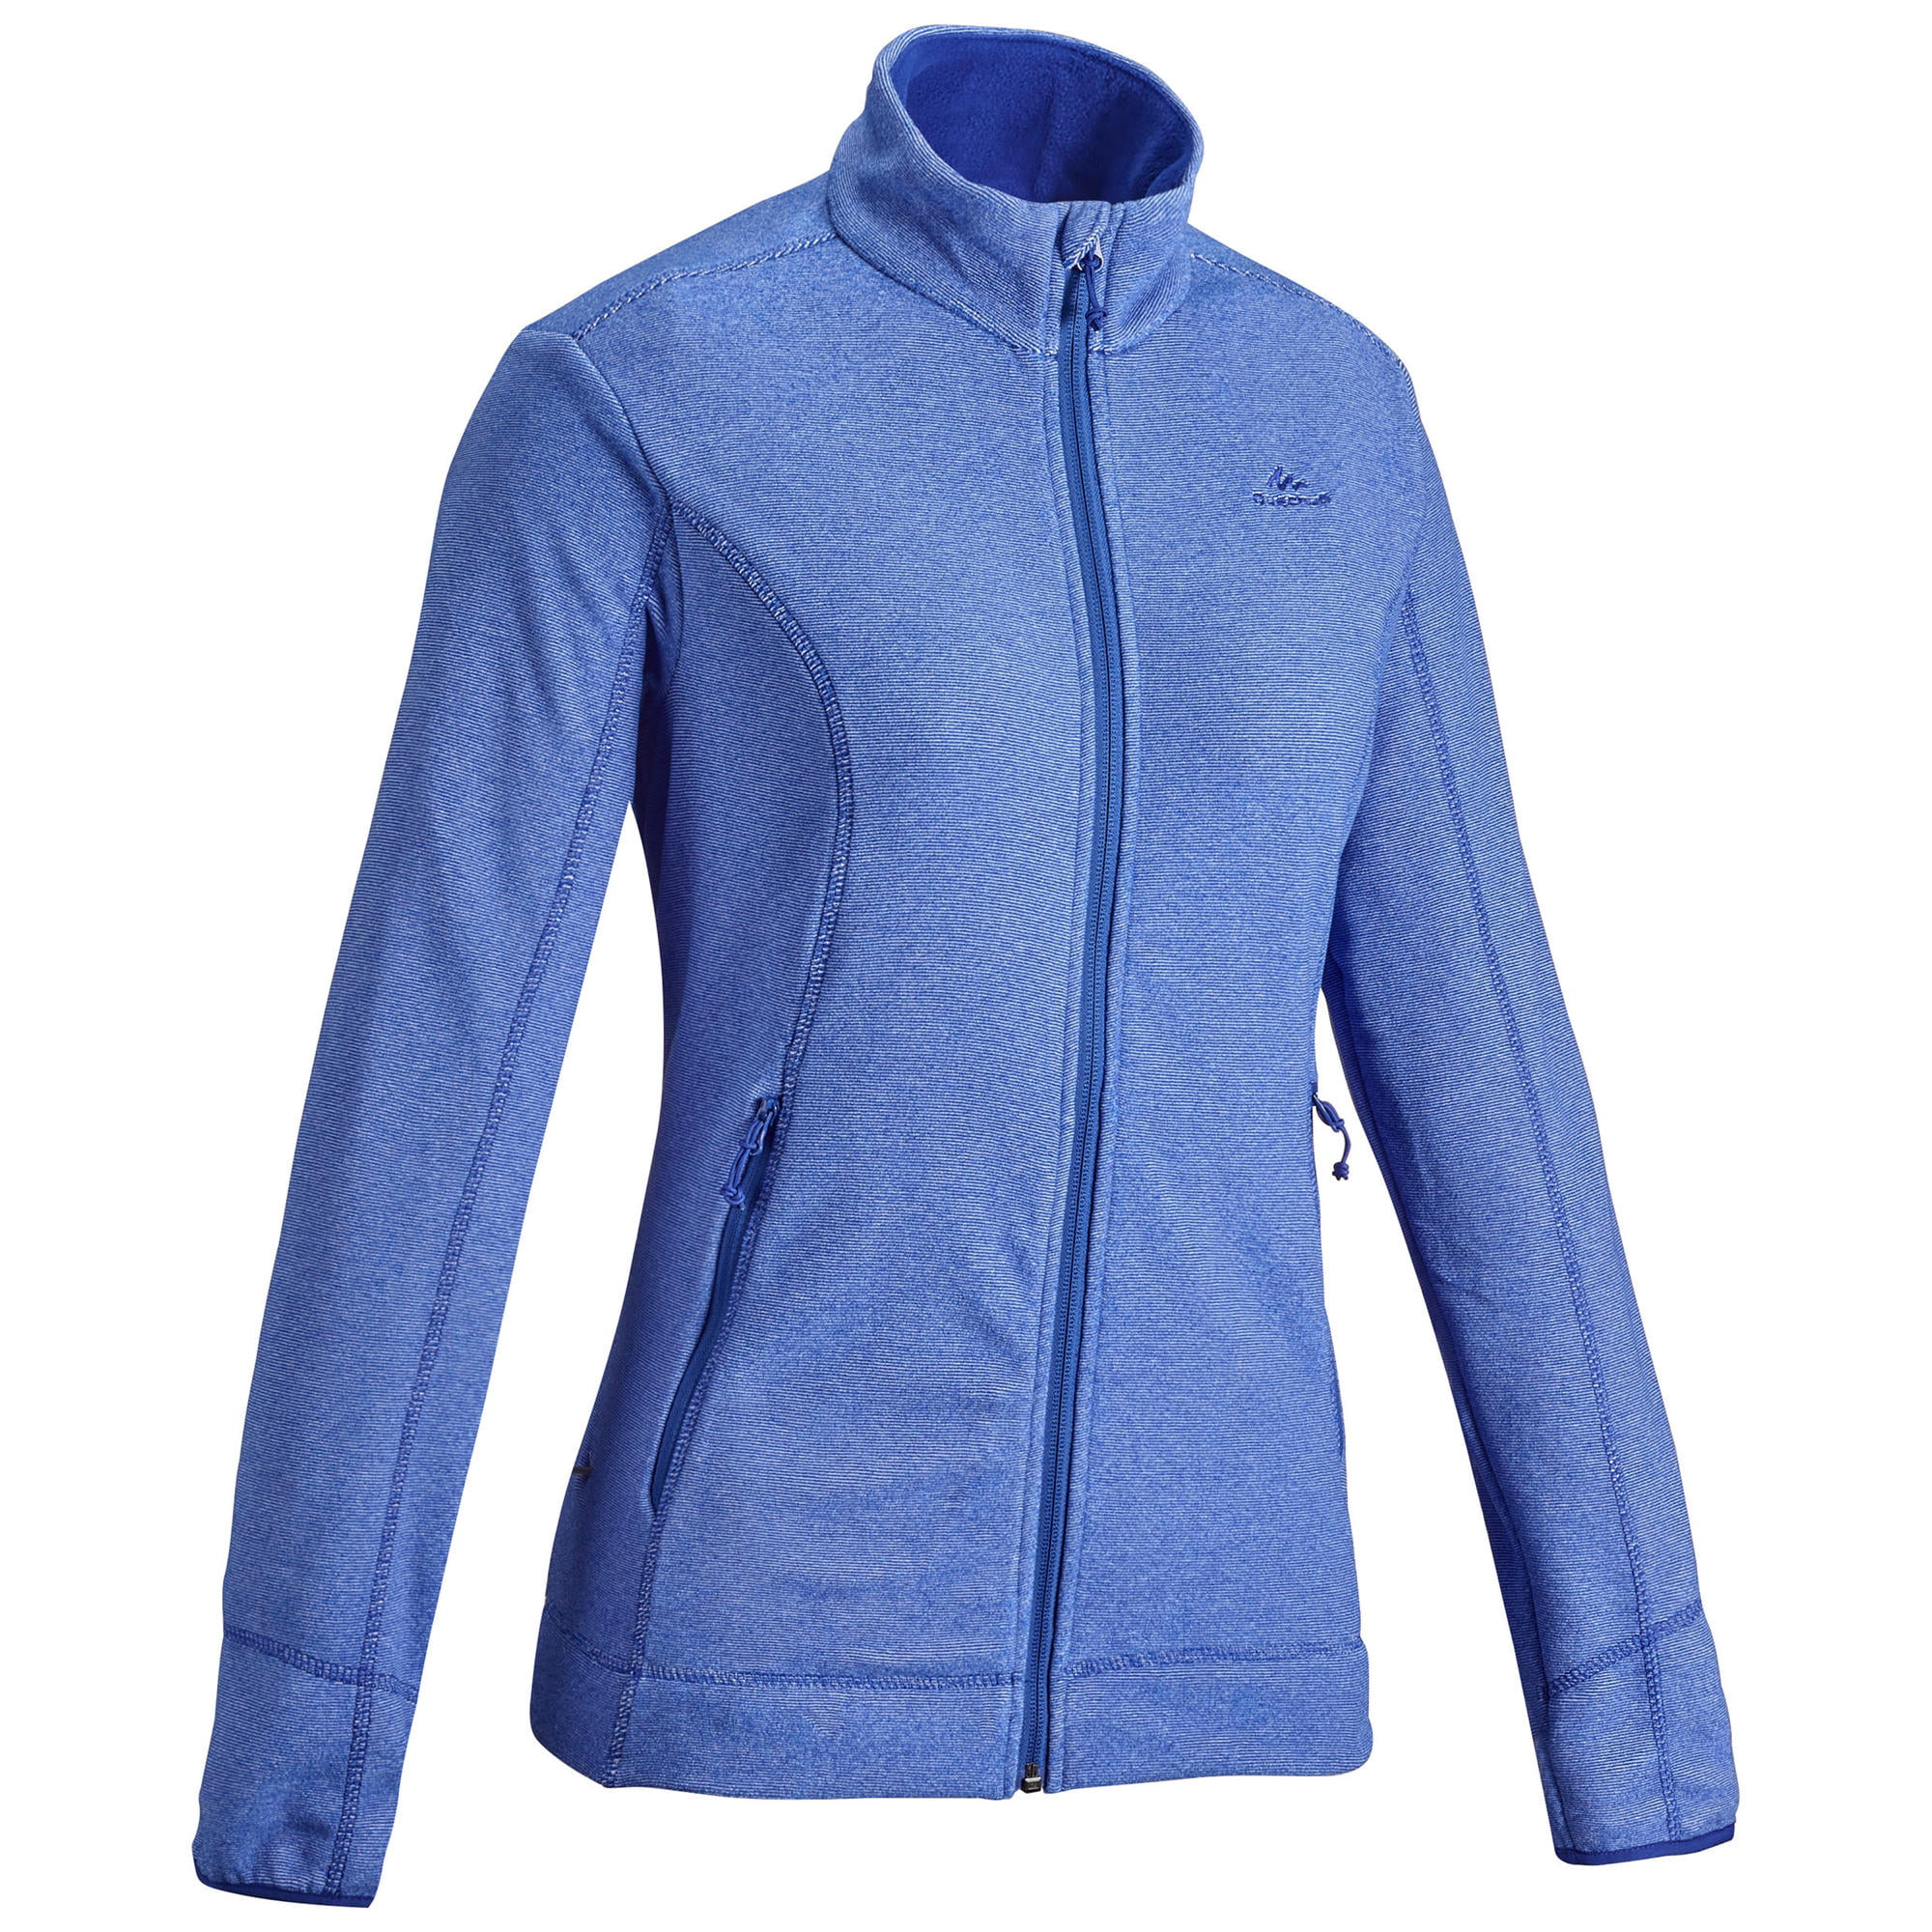 Decathlon - Decathlon - Women's MH120 Fleece Hiking Jacket - Walmart ...